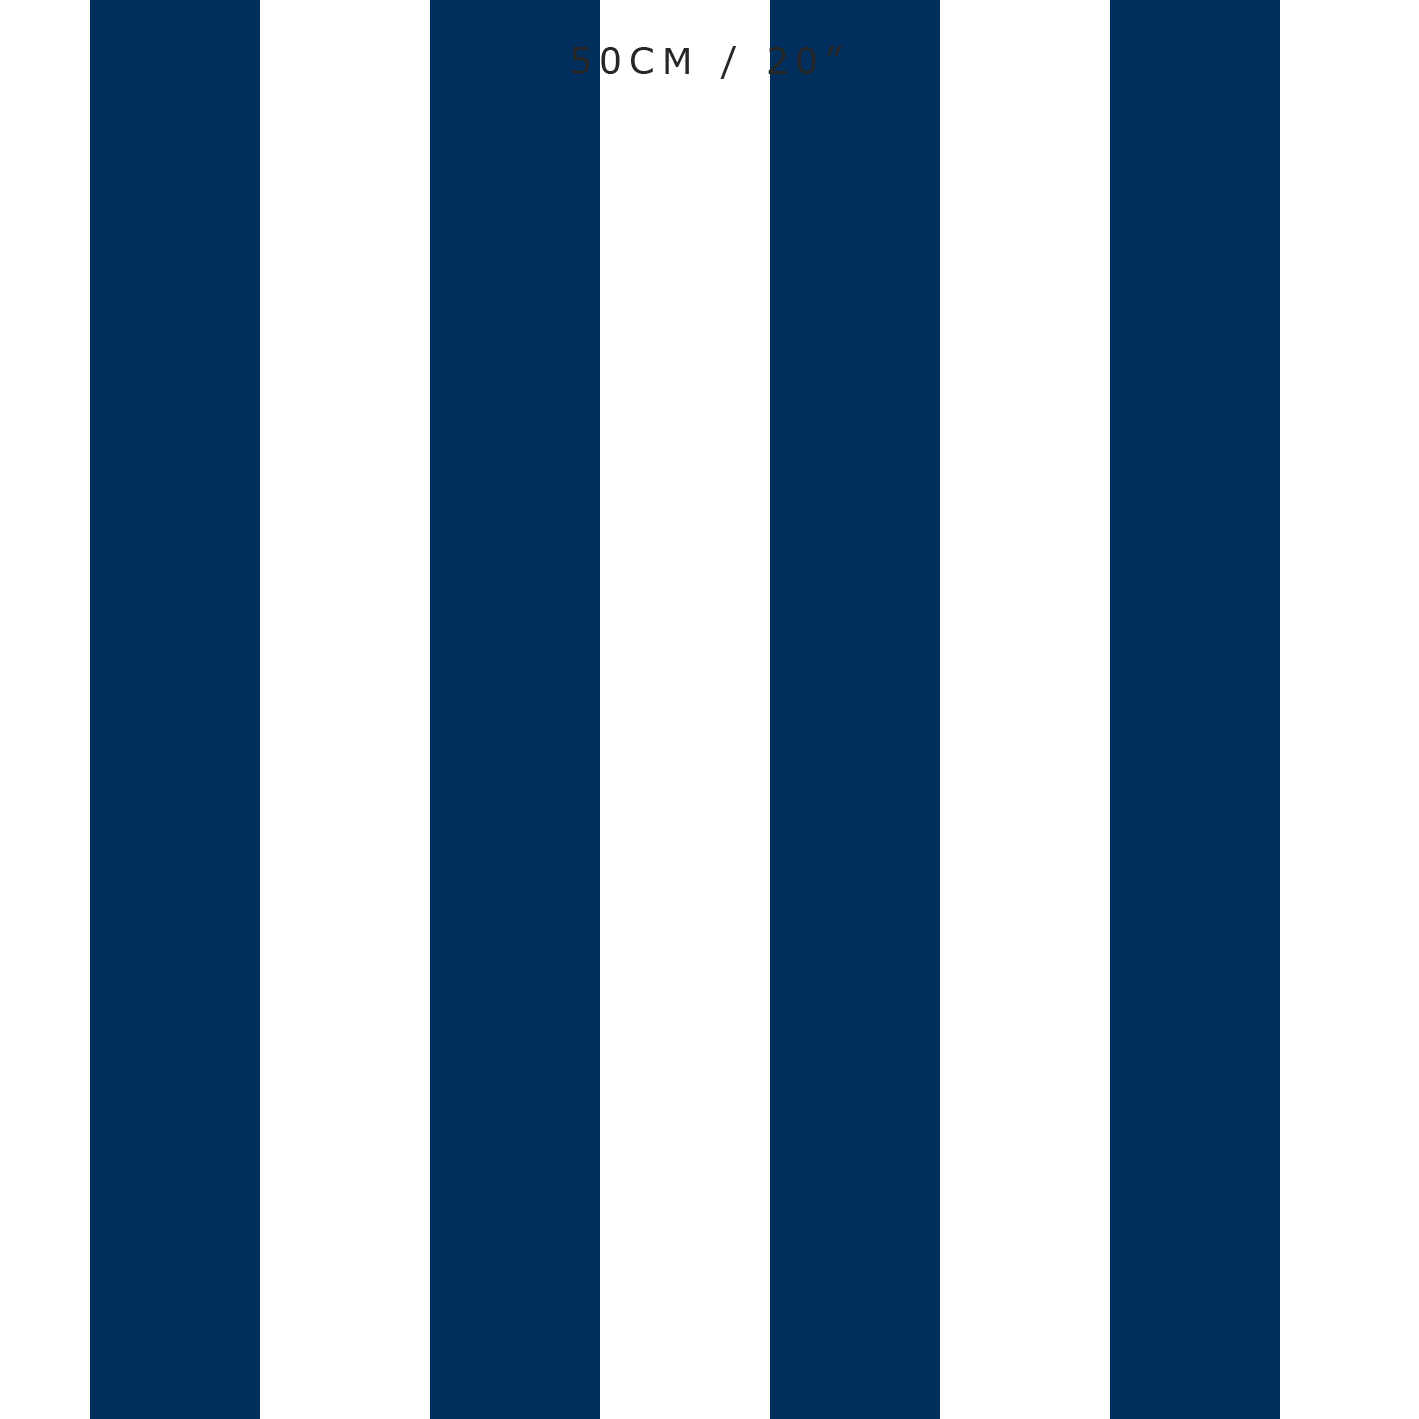 Awning Stripe Fabric - Navy - Hydrangea Lane Home